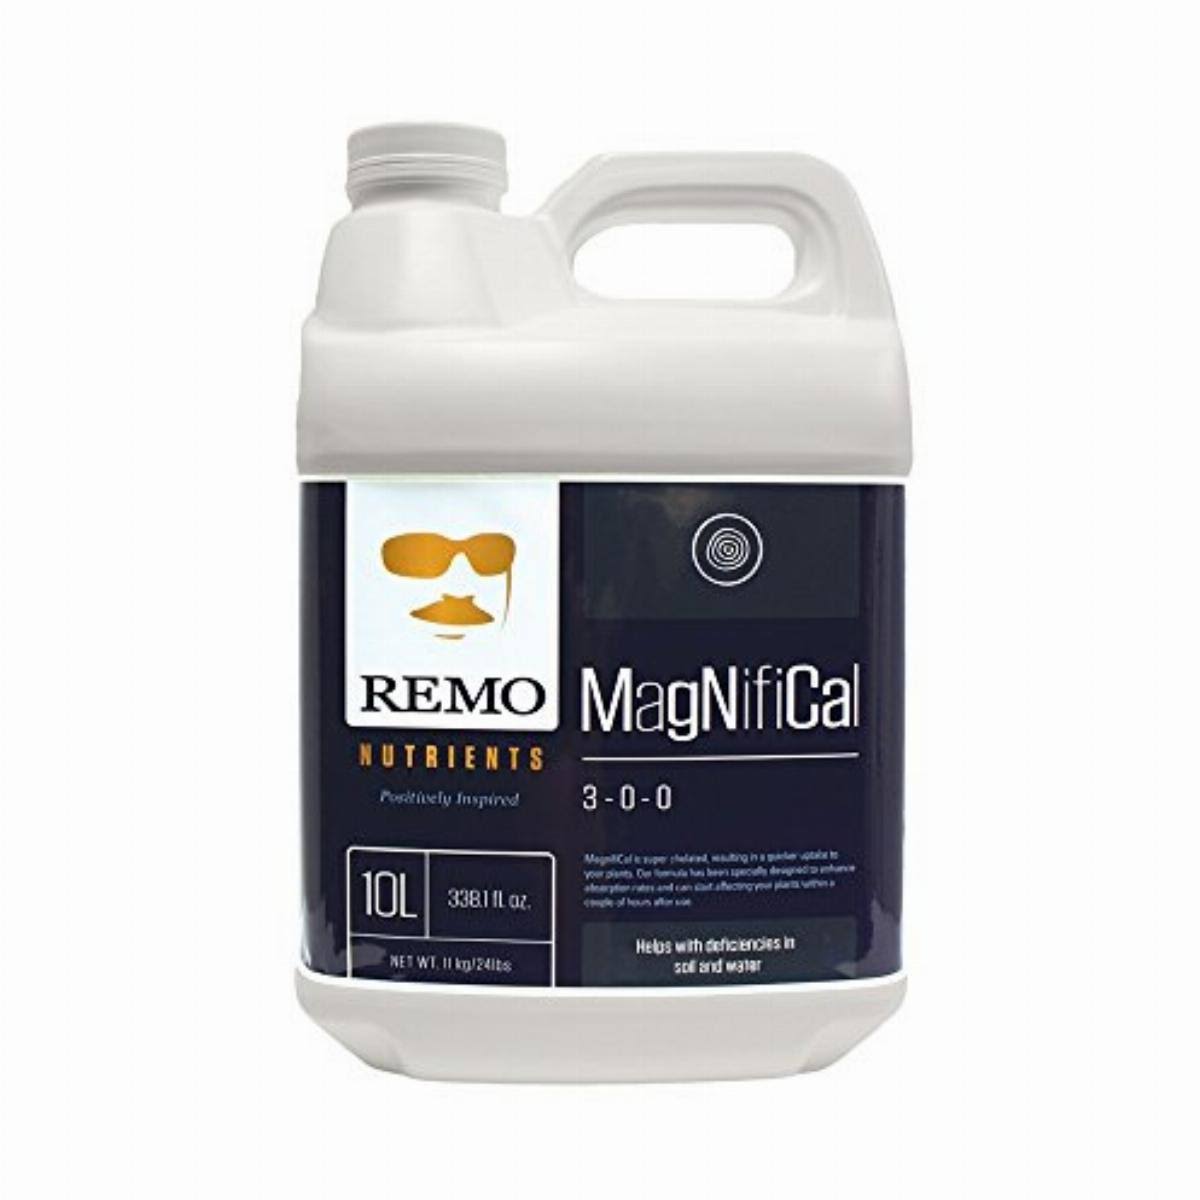 Remo Nutrients Magnifical - 10L